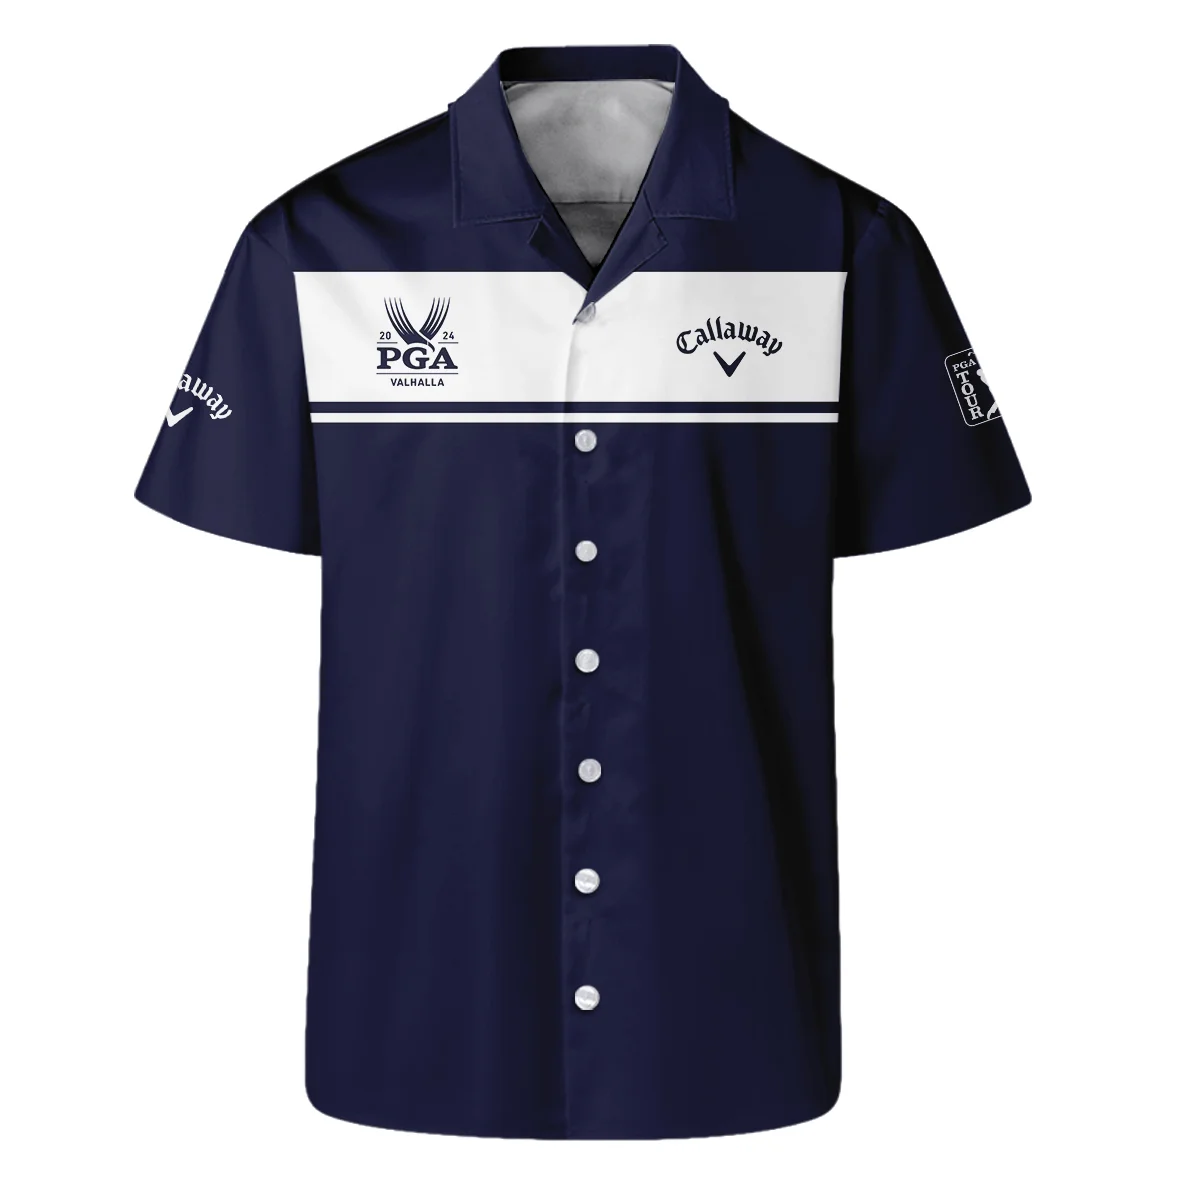 Callaway 2024 PGA Championship Golf Unisex Sweatshirt Sports Dark Blue White All Over Print Sweatshirt